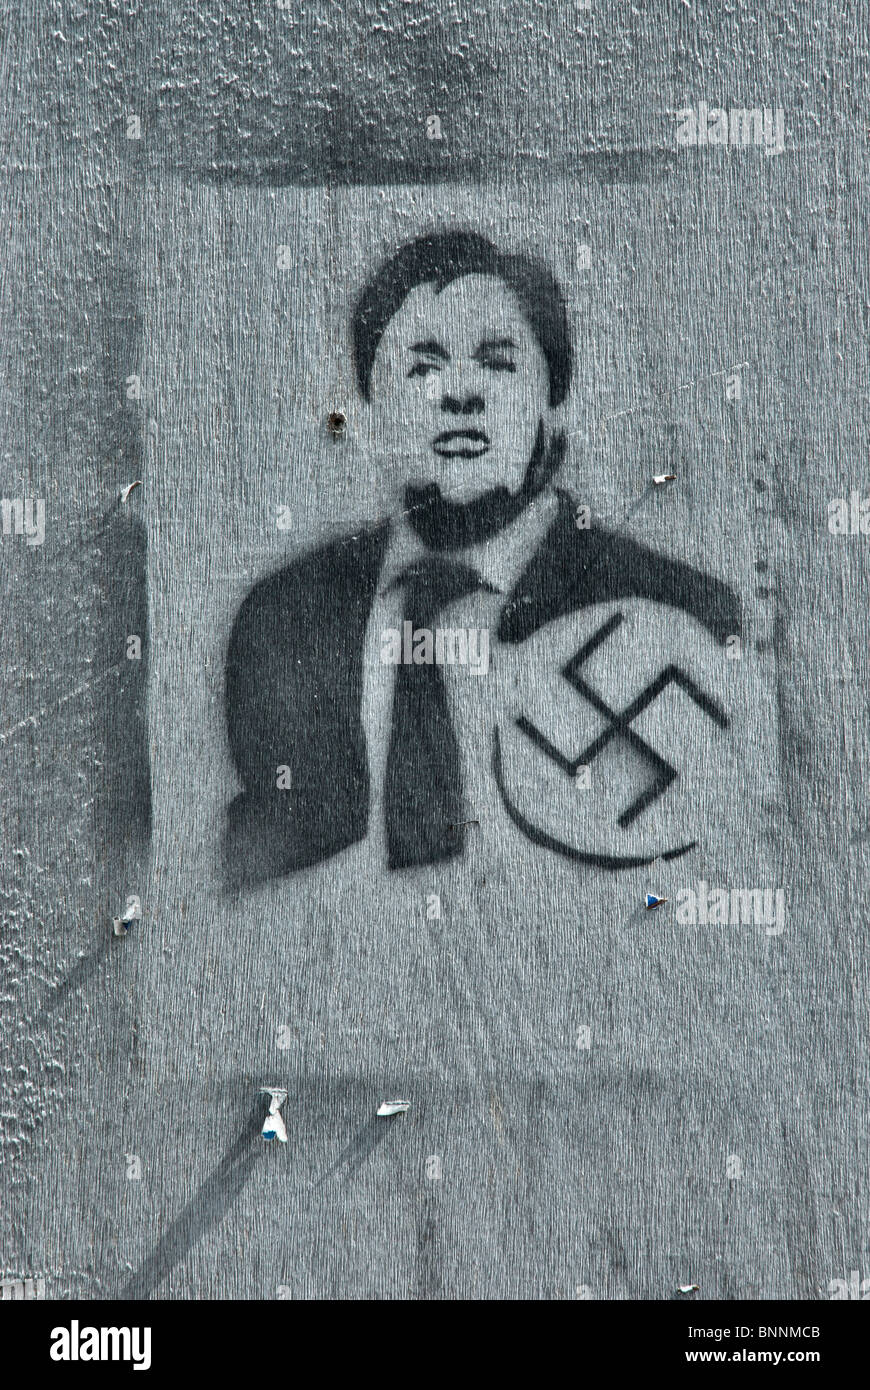 Nick Griffin graffitti spray image with Nazi symbol Stock Photo